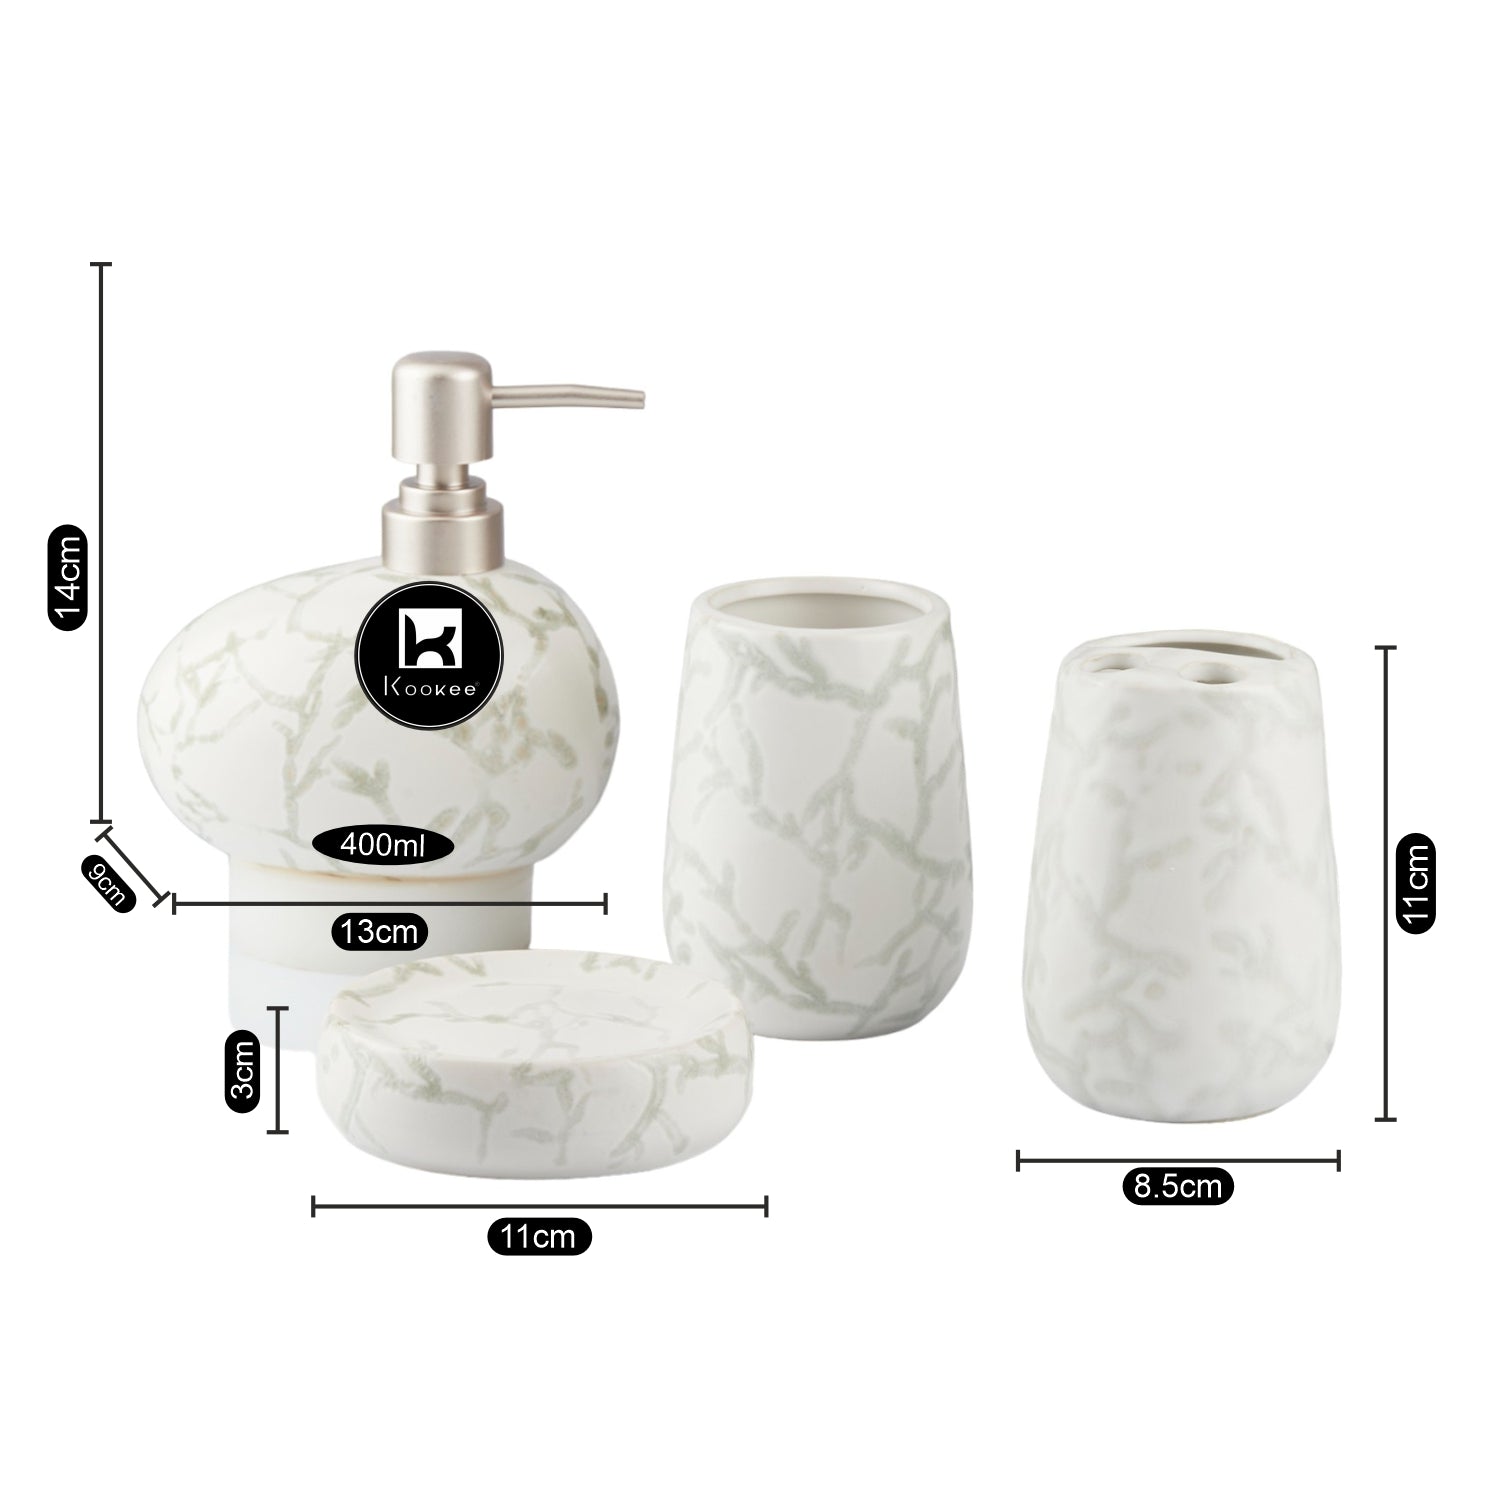 Ceramic Bathroom Set of 4 with Soap Dispenser (10432)